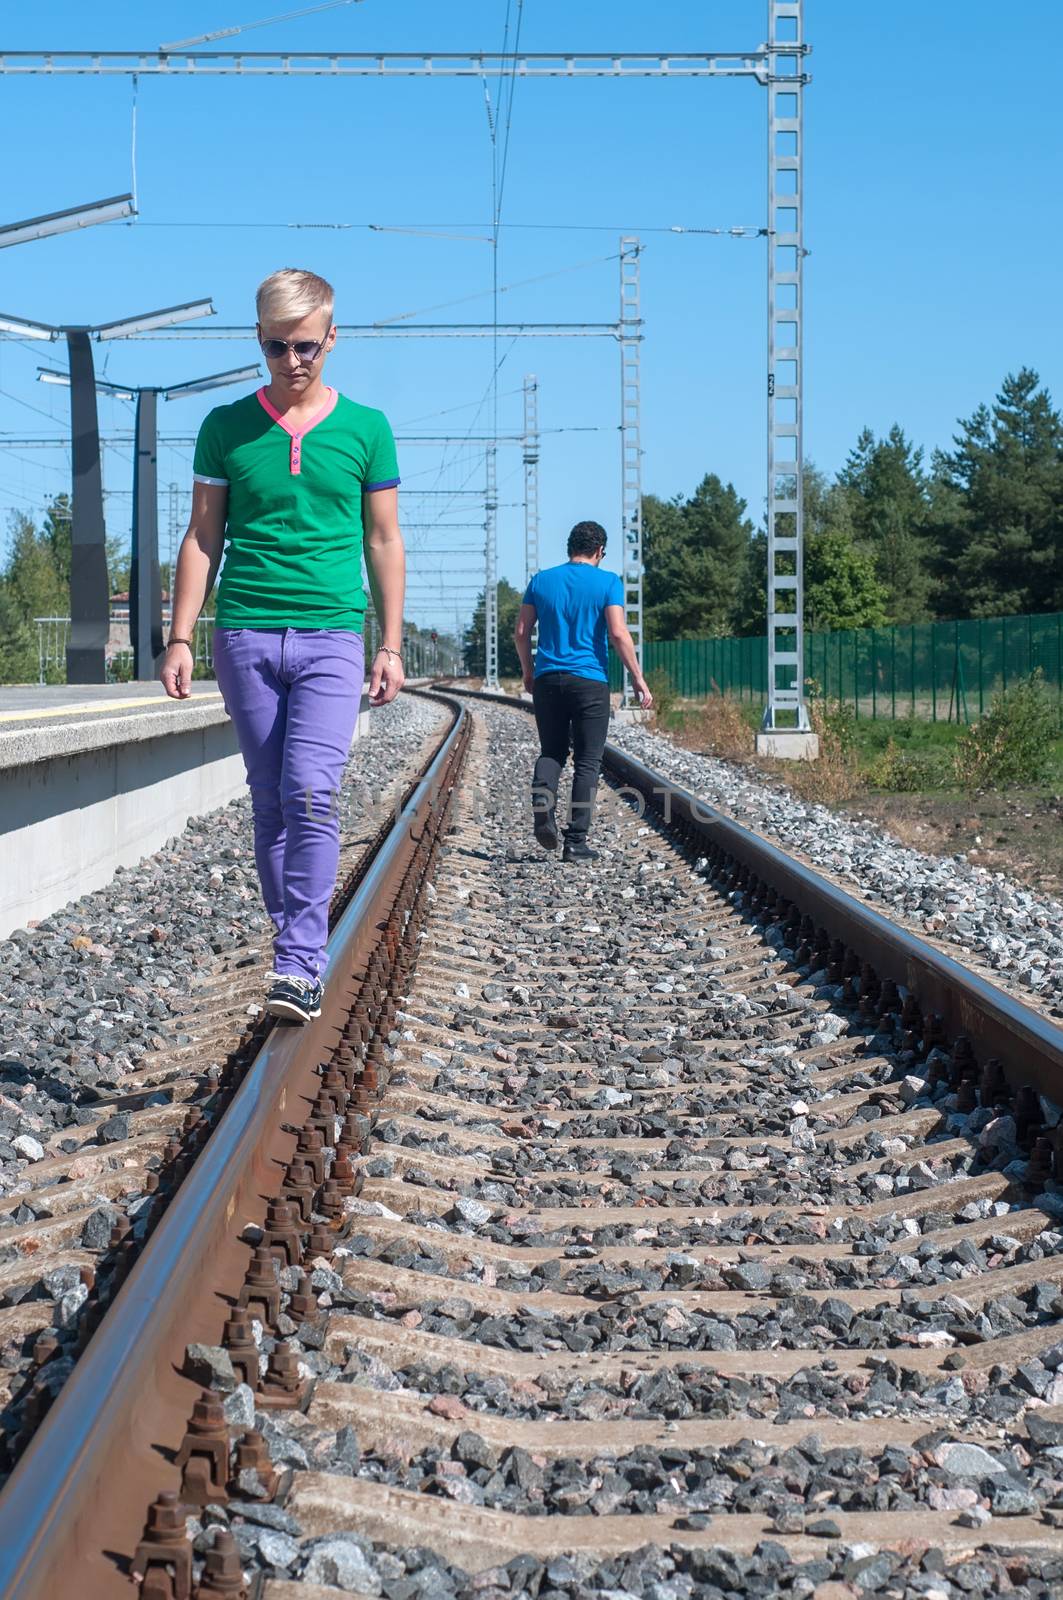 Handsome man walking on train tracks by anytka